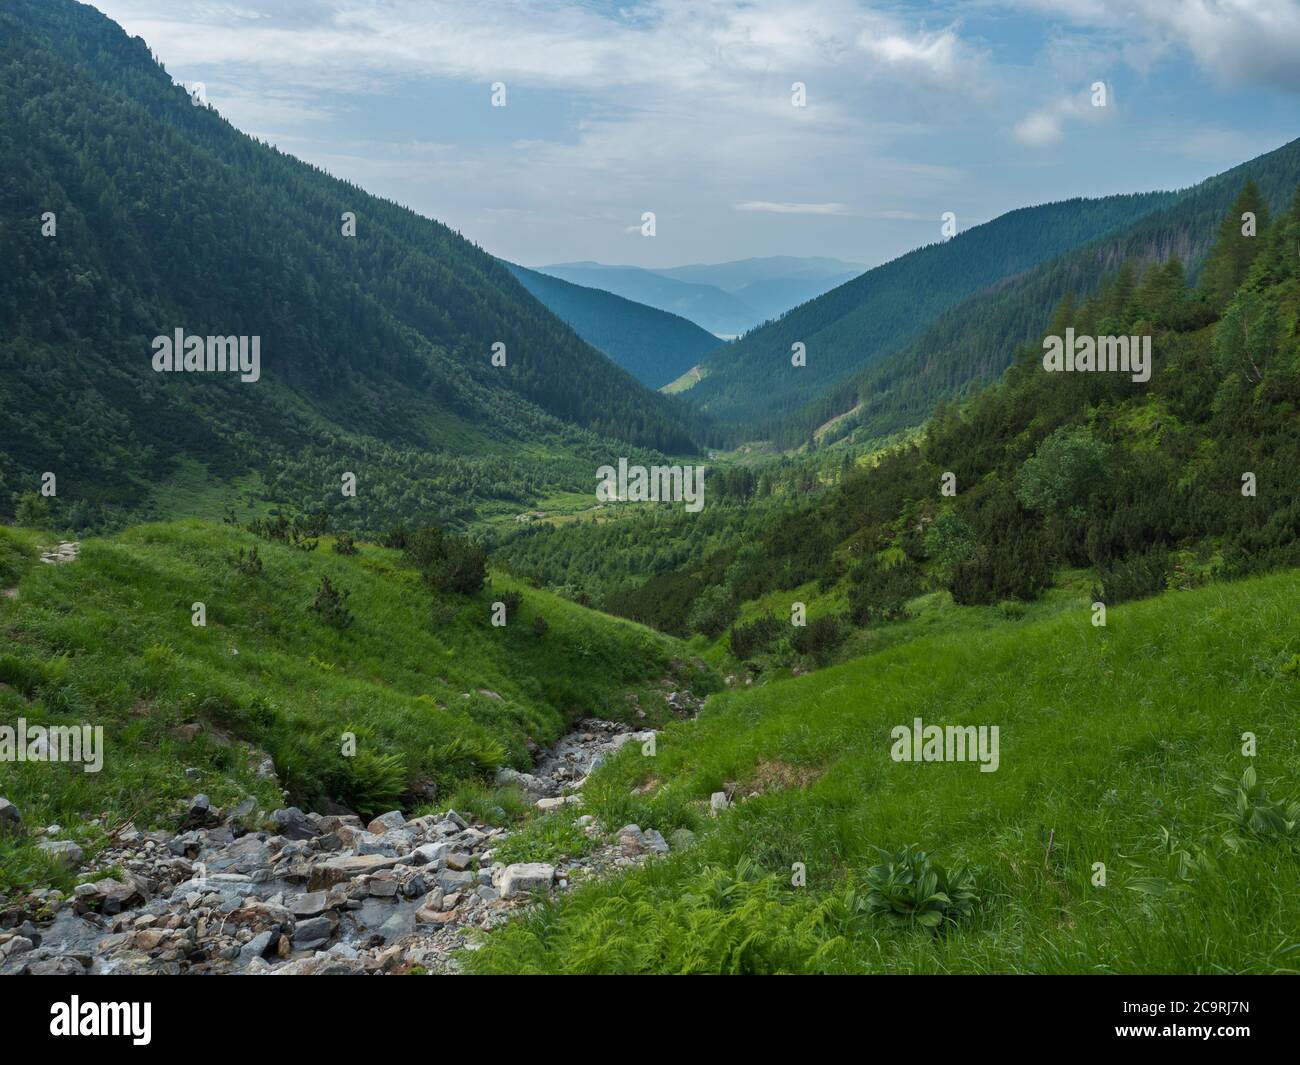 Beautiful mountain landscape with lush green grass, spruce trees, dwarf scrub pine and bald mountain peaks. Ziarska dolina, Western Tatras mountains Stock Photo